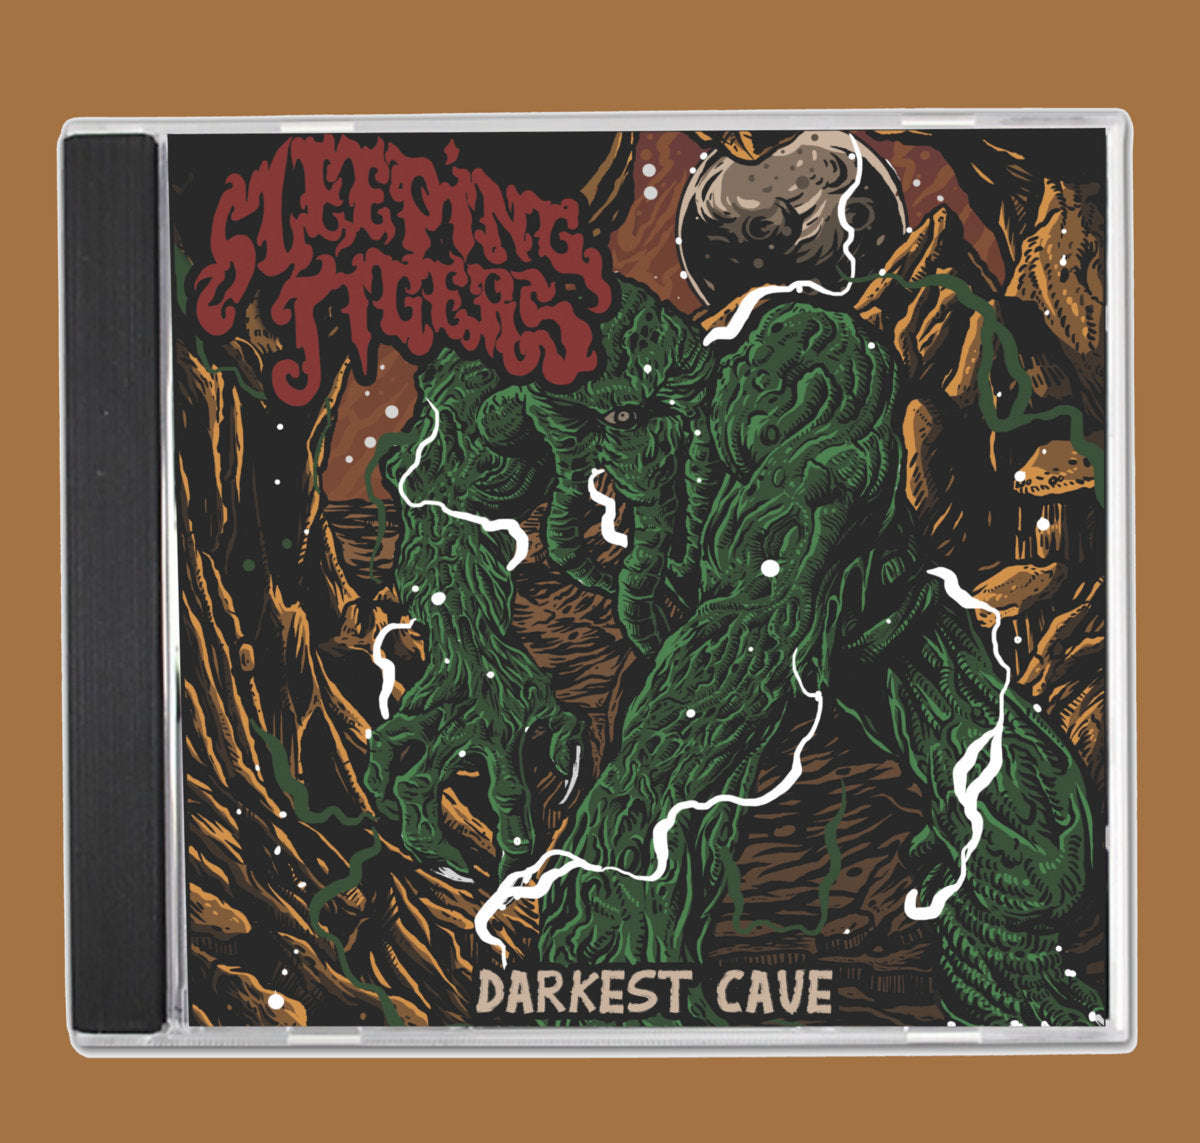 Sleeping Tigers - "Darkest Cave" Compact Disc